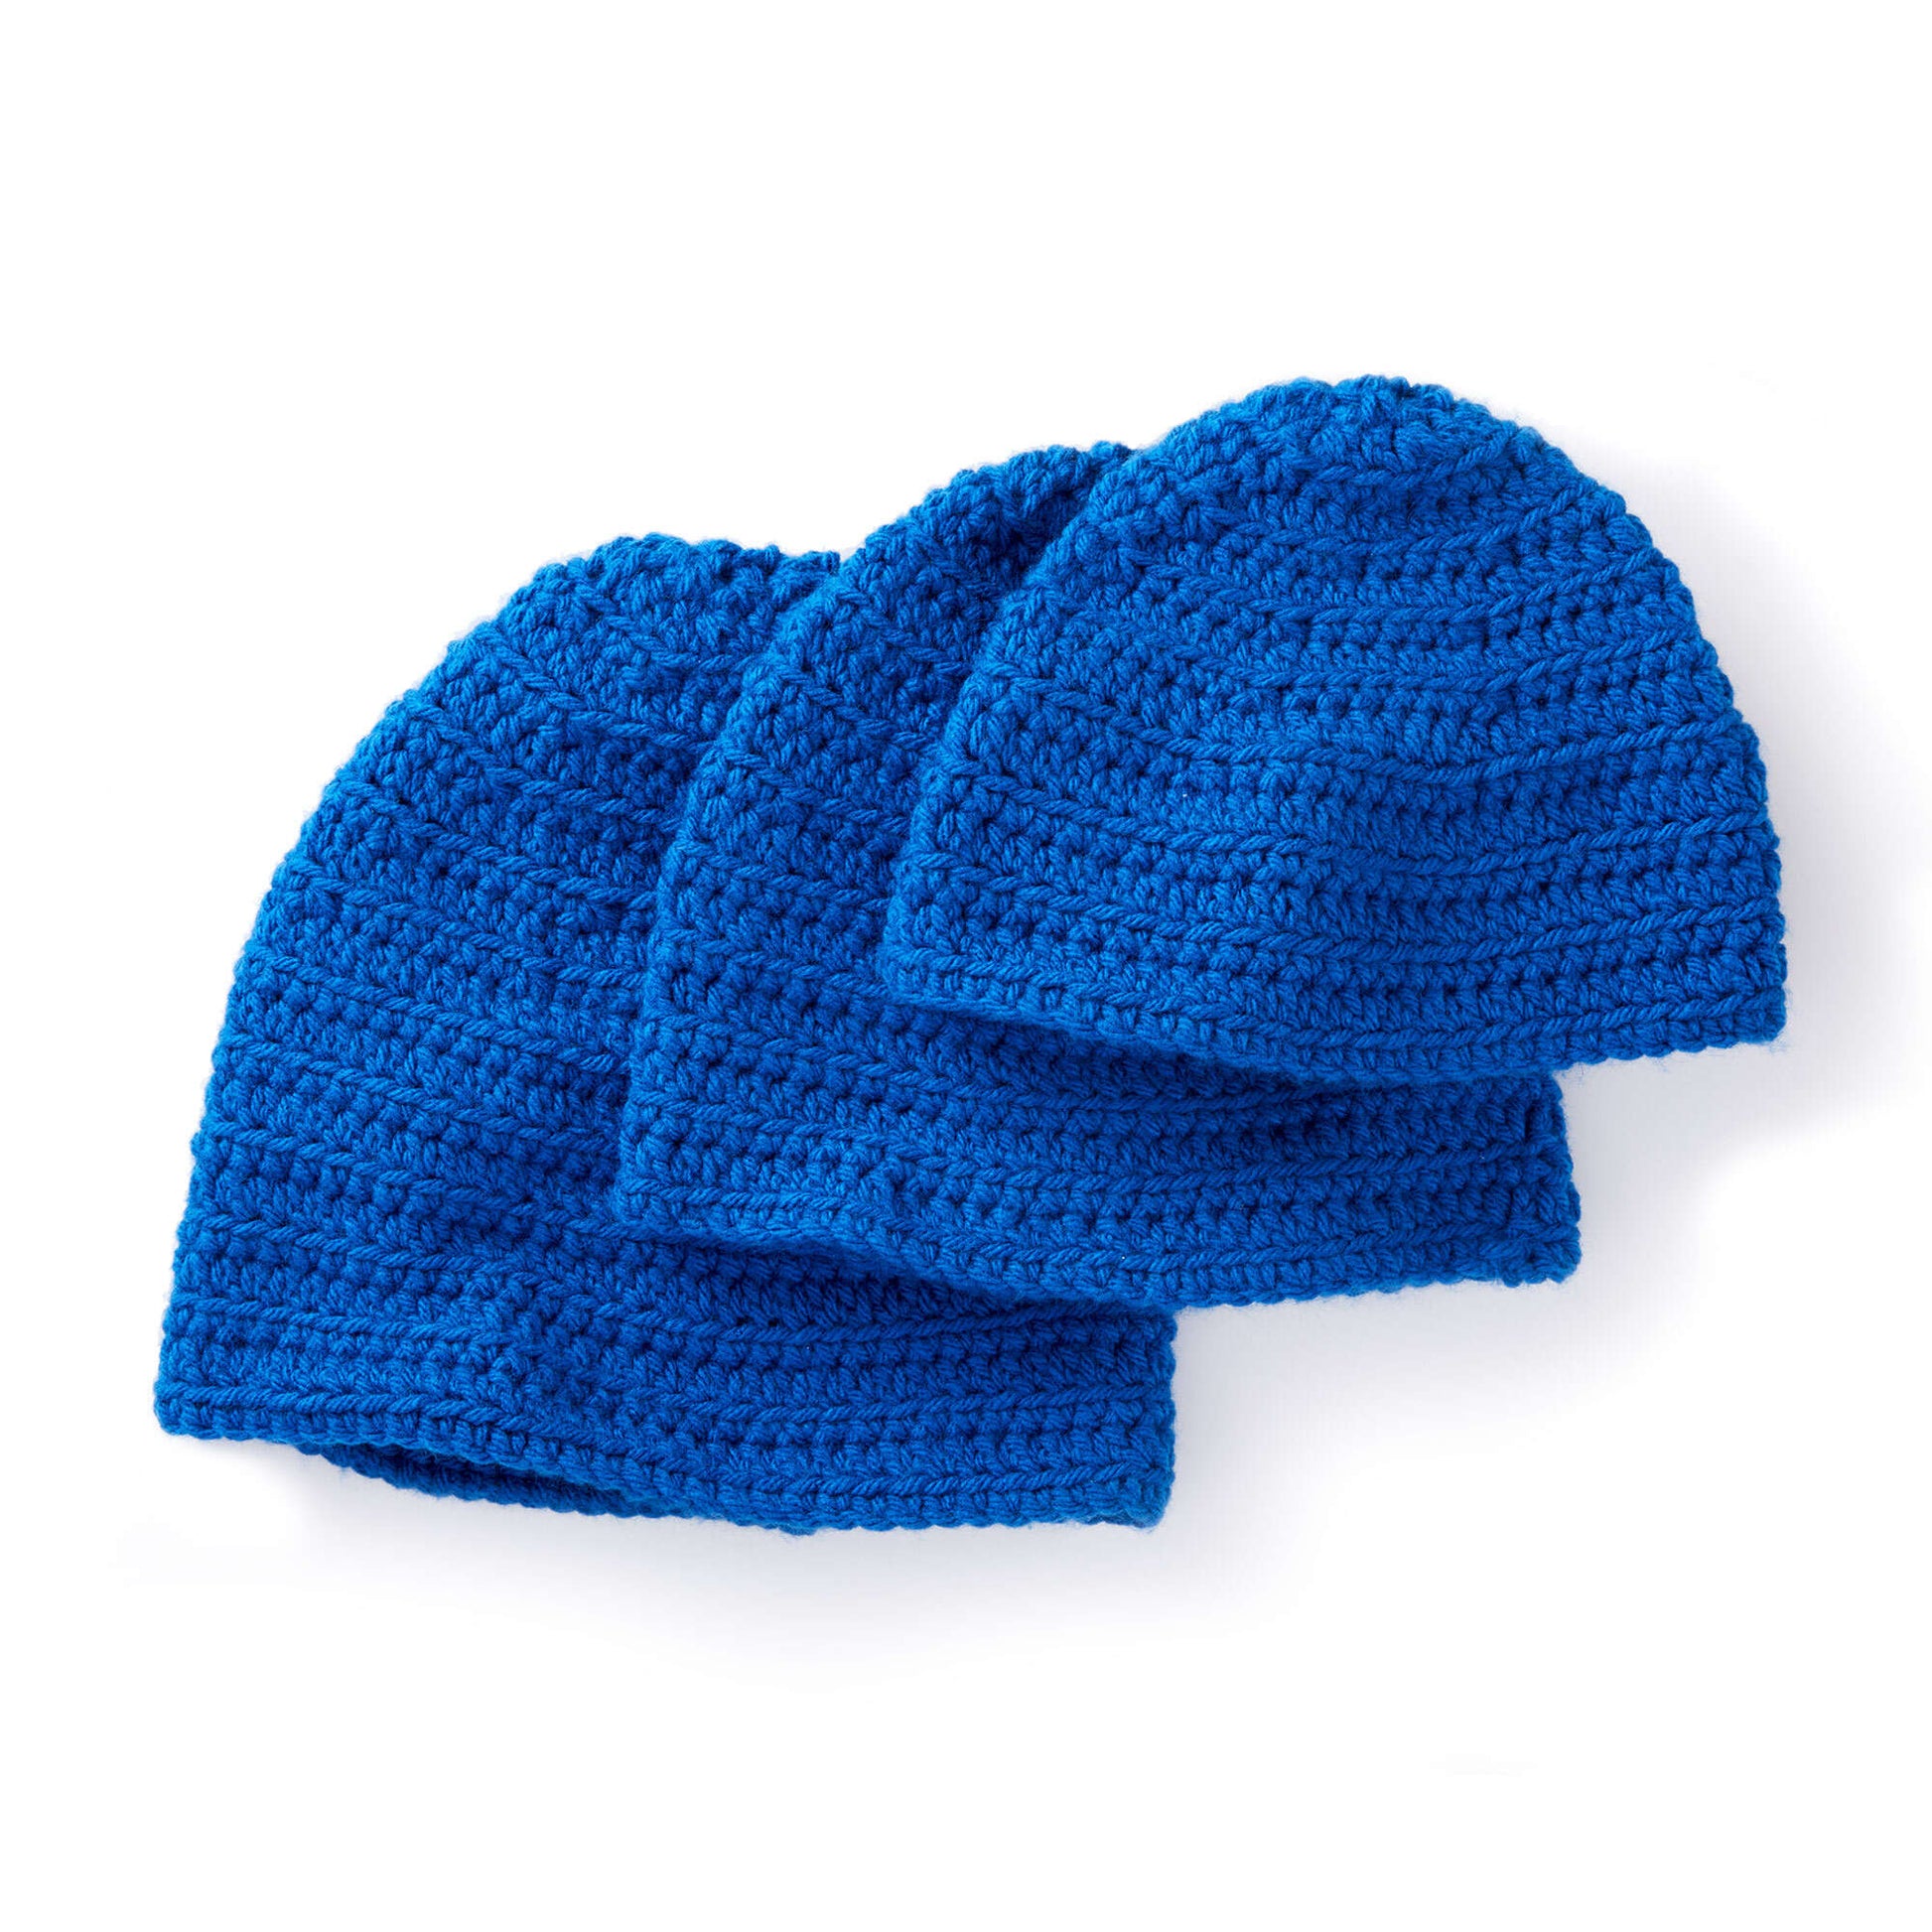 Free Caron Ridges Family Crochet Hat Pattern